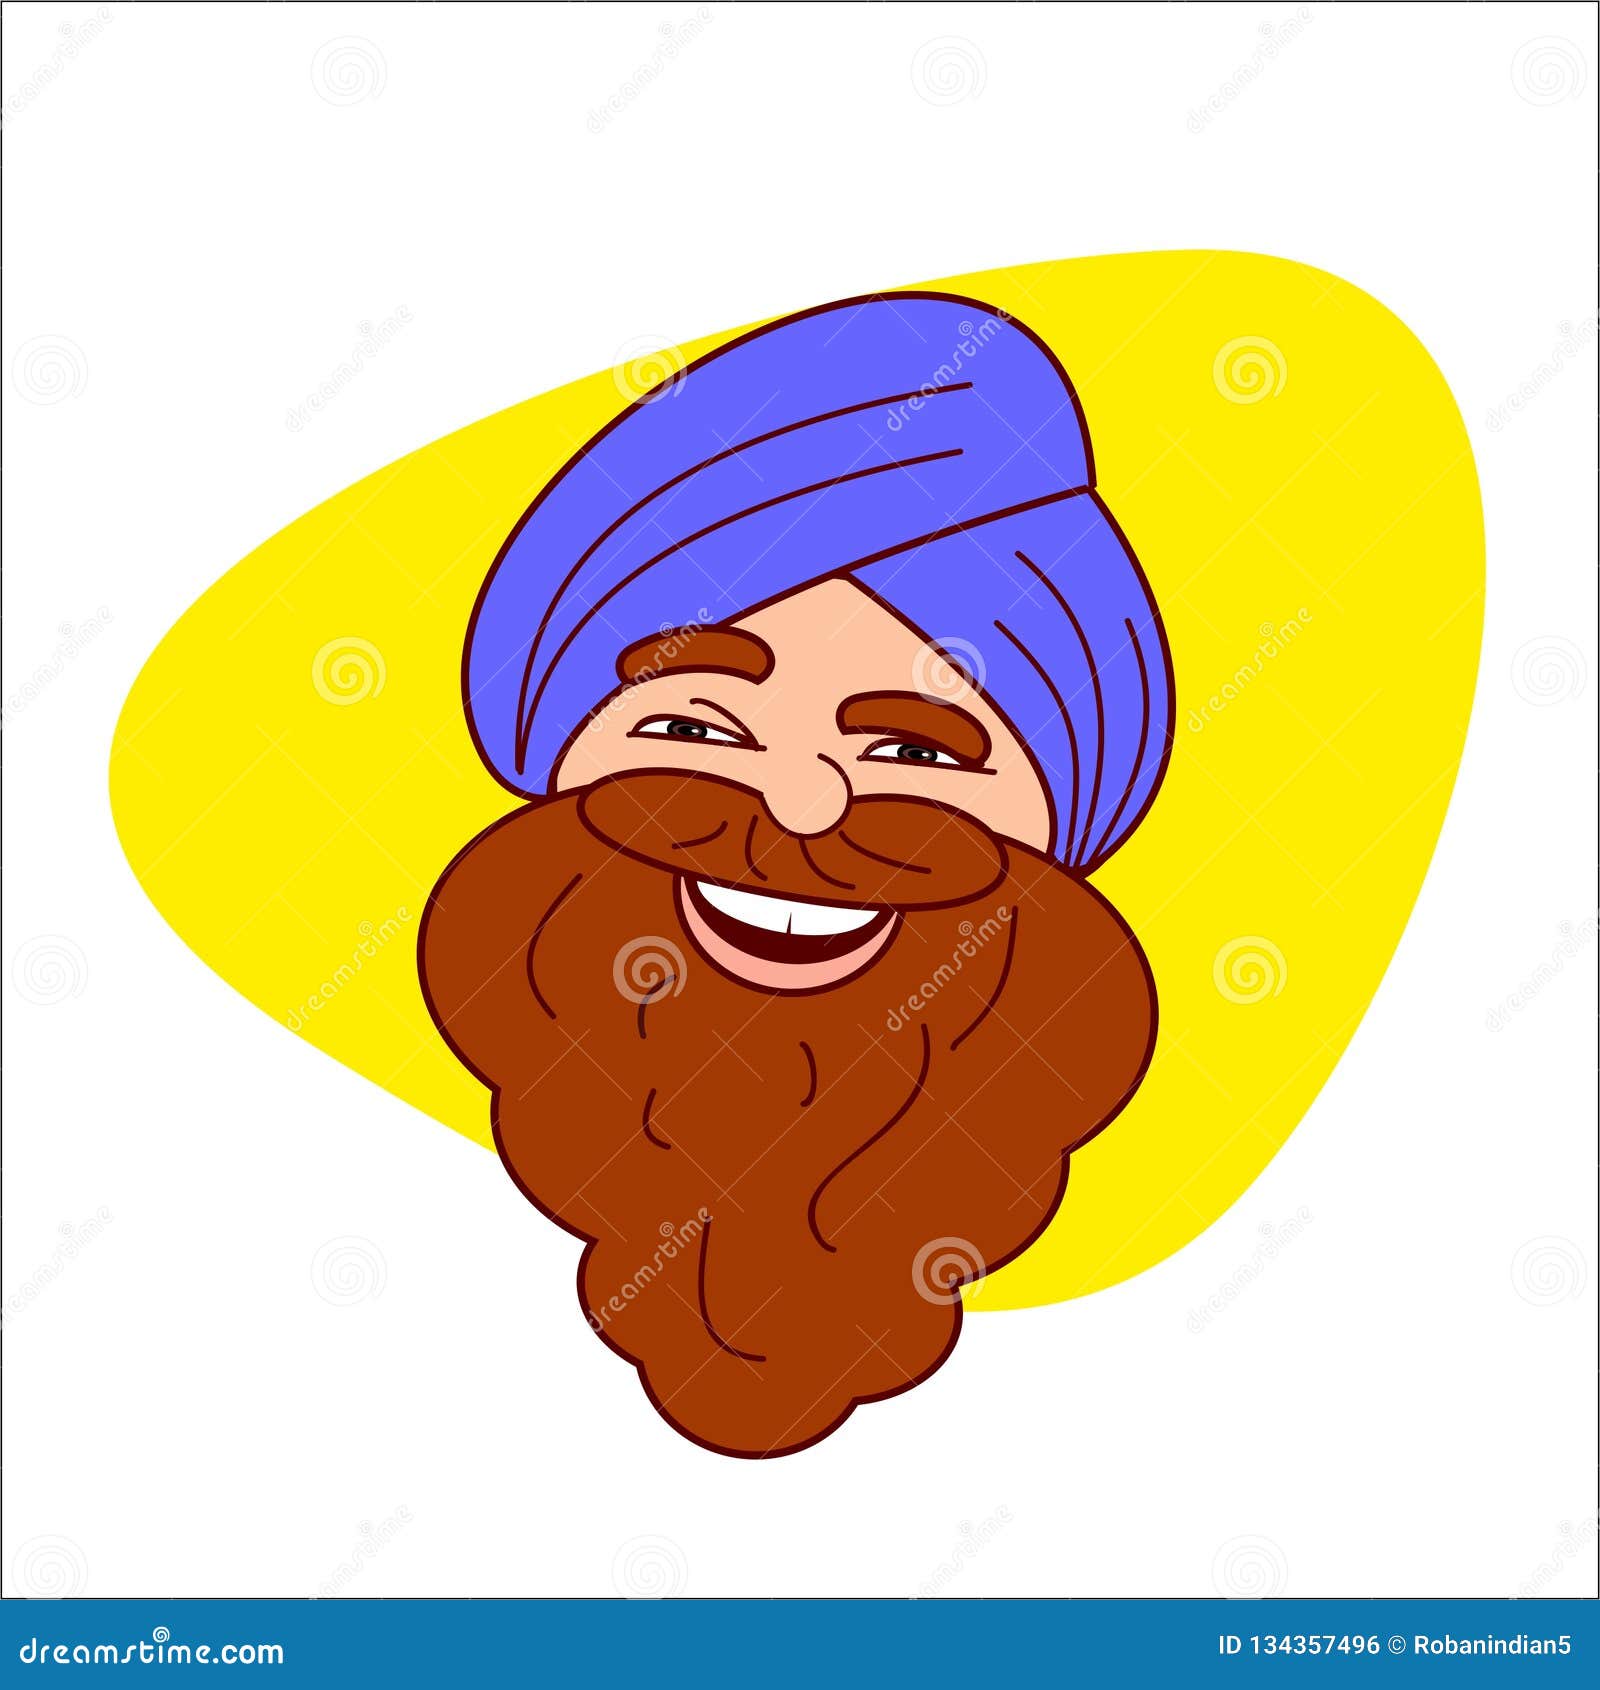 Sardar Ji Cartoon Character Vector Illustration Indian Man or Happy Punjabi  Icon Stock Vector - Illustration of sardar, punjabi: 134357496